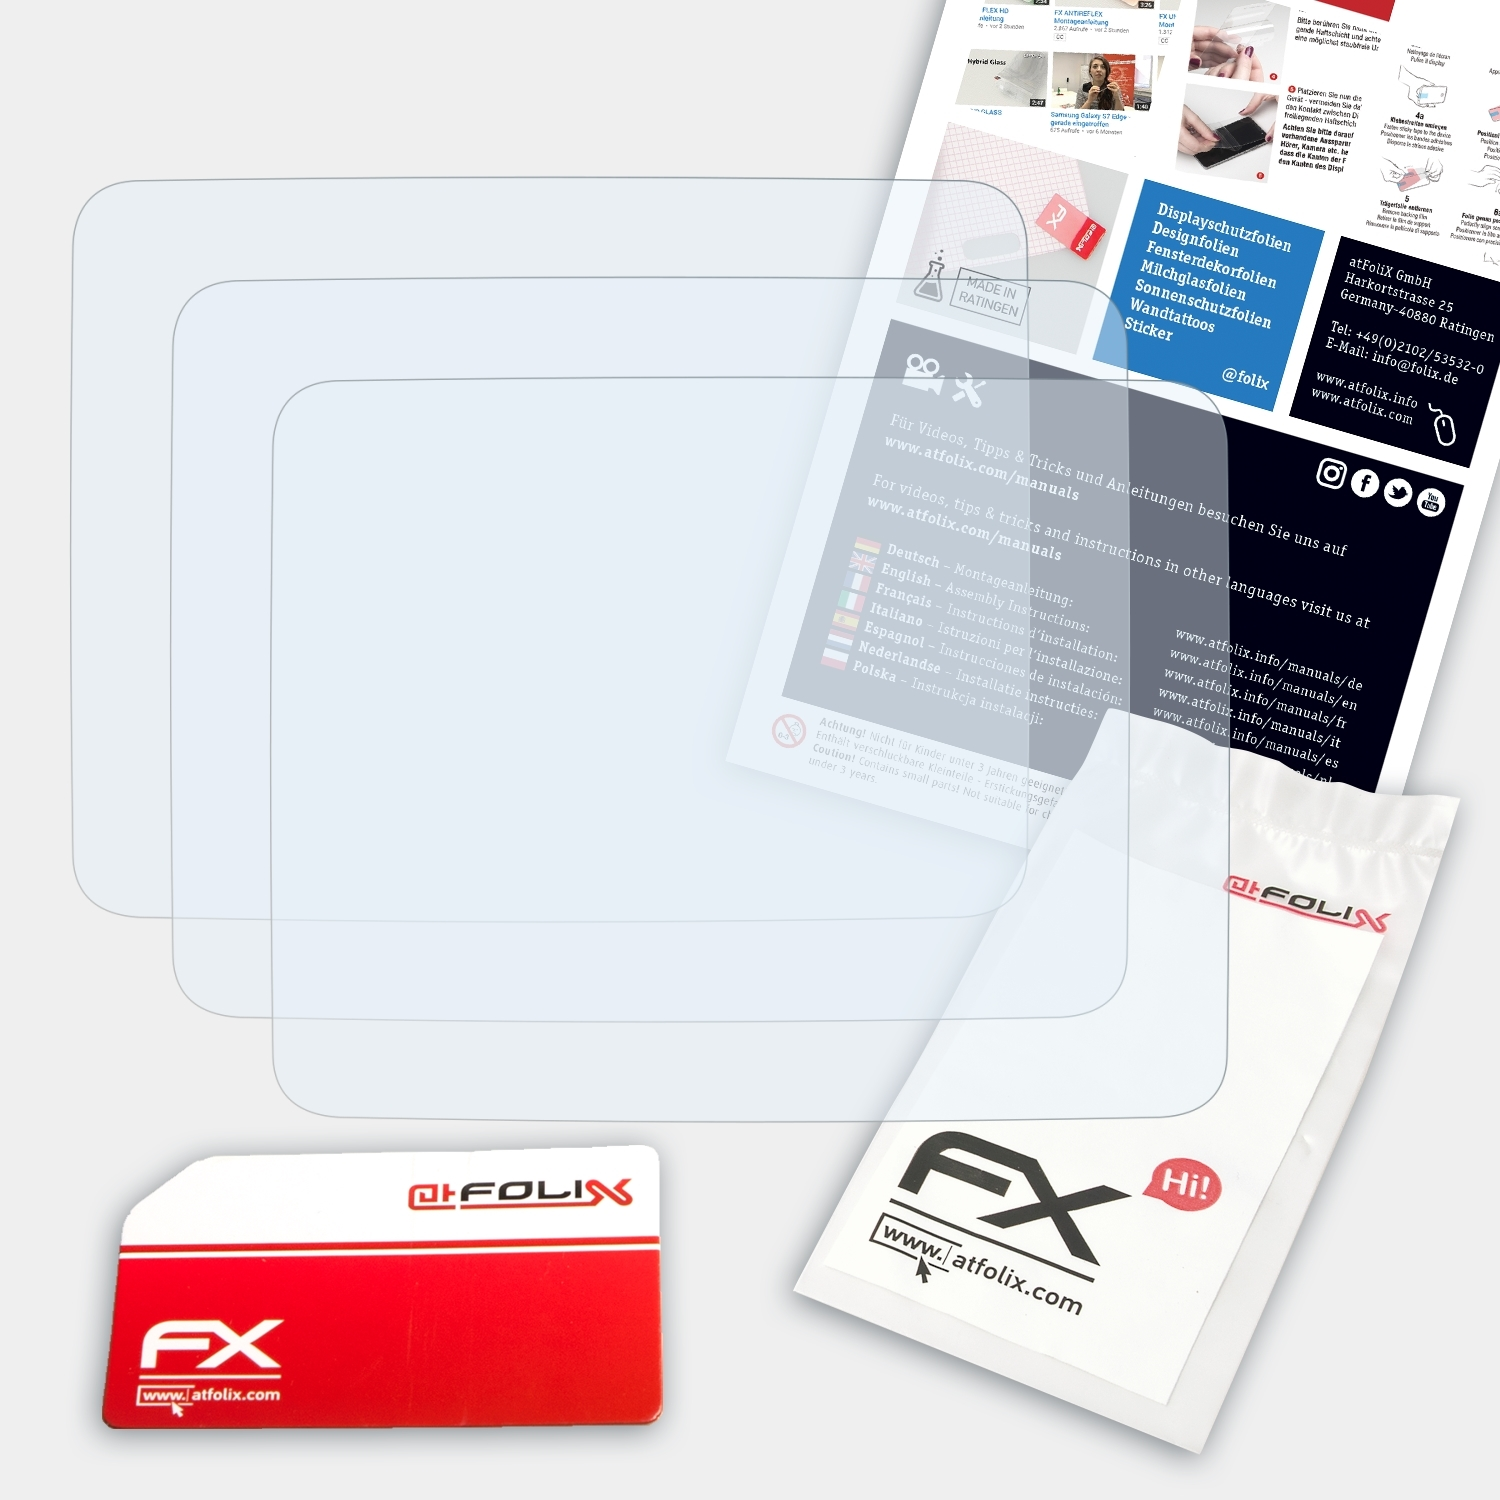 XP130) FX-Clear 3x Displayschutz(für ATFOLIX FinePix Fujifilm